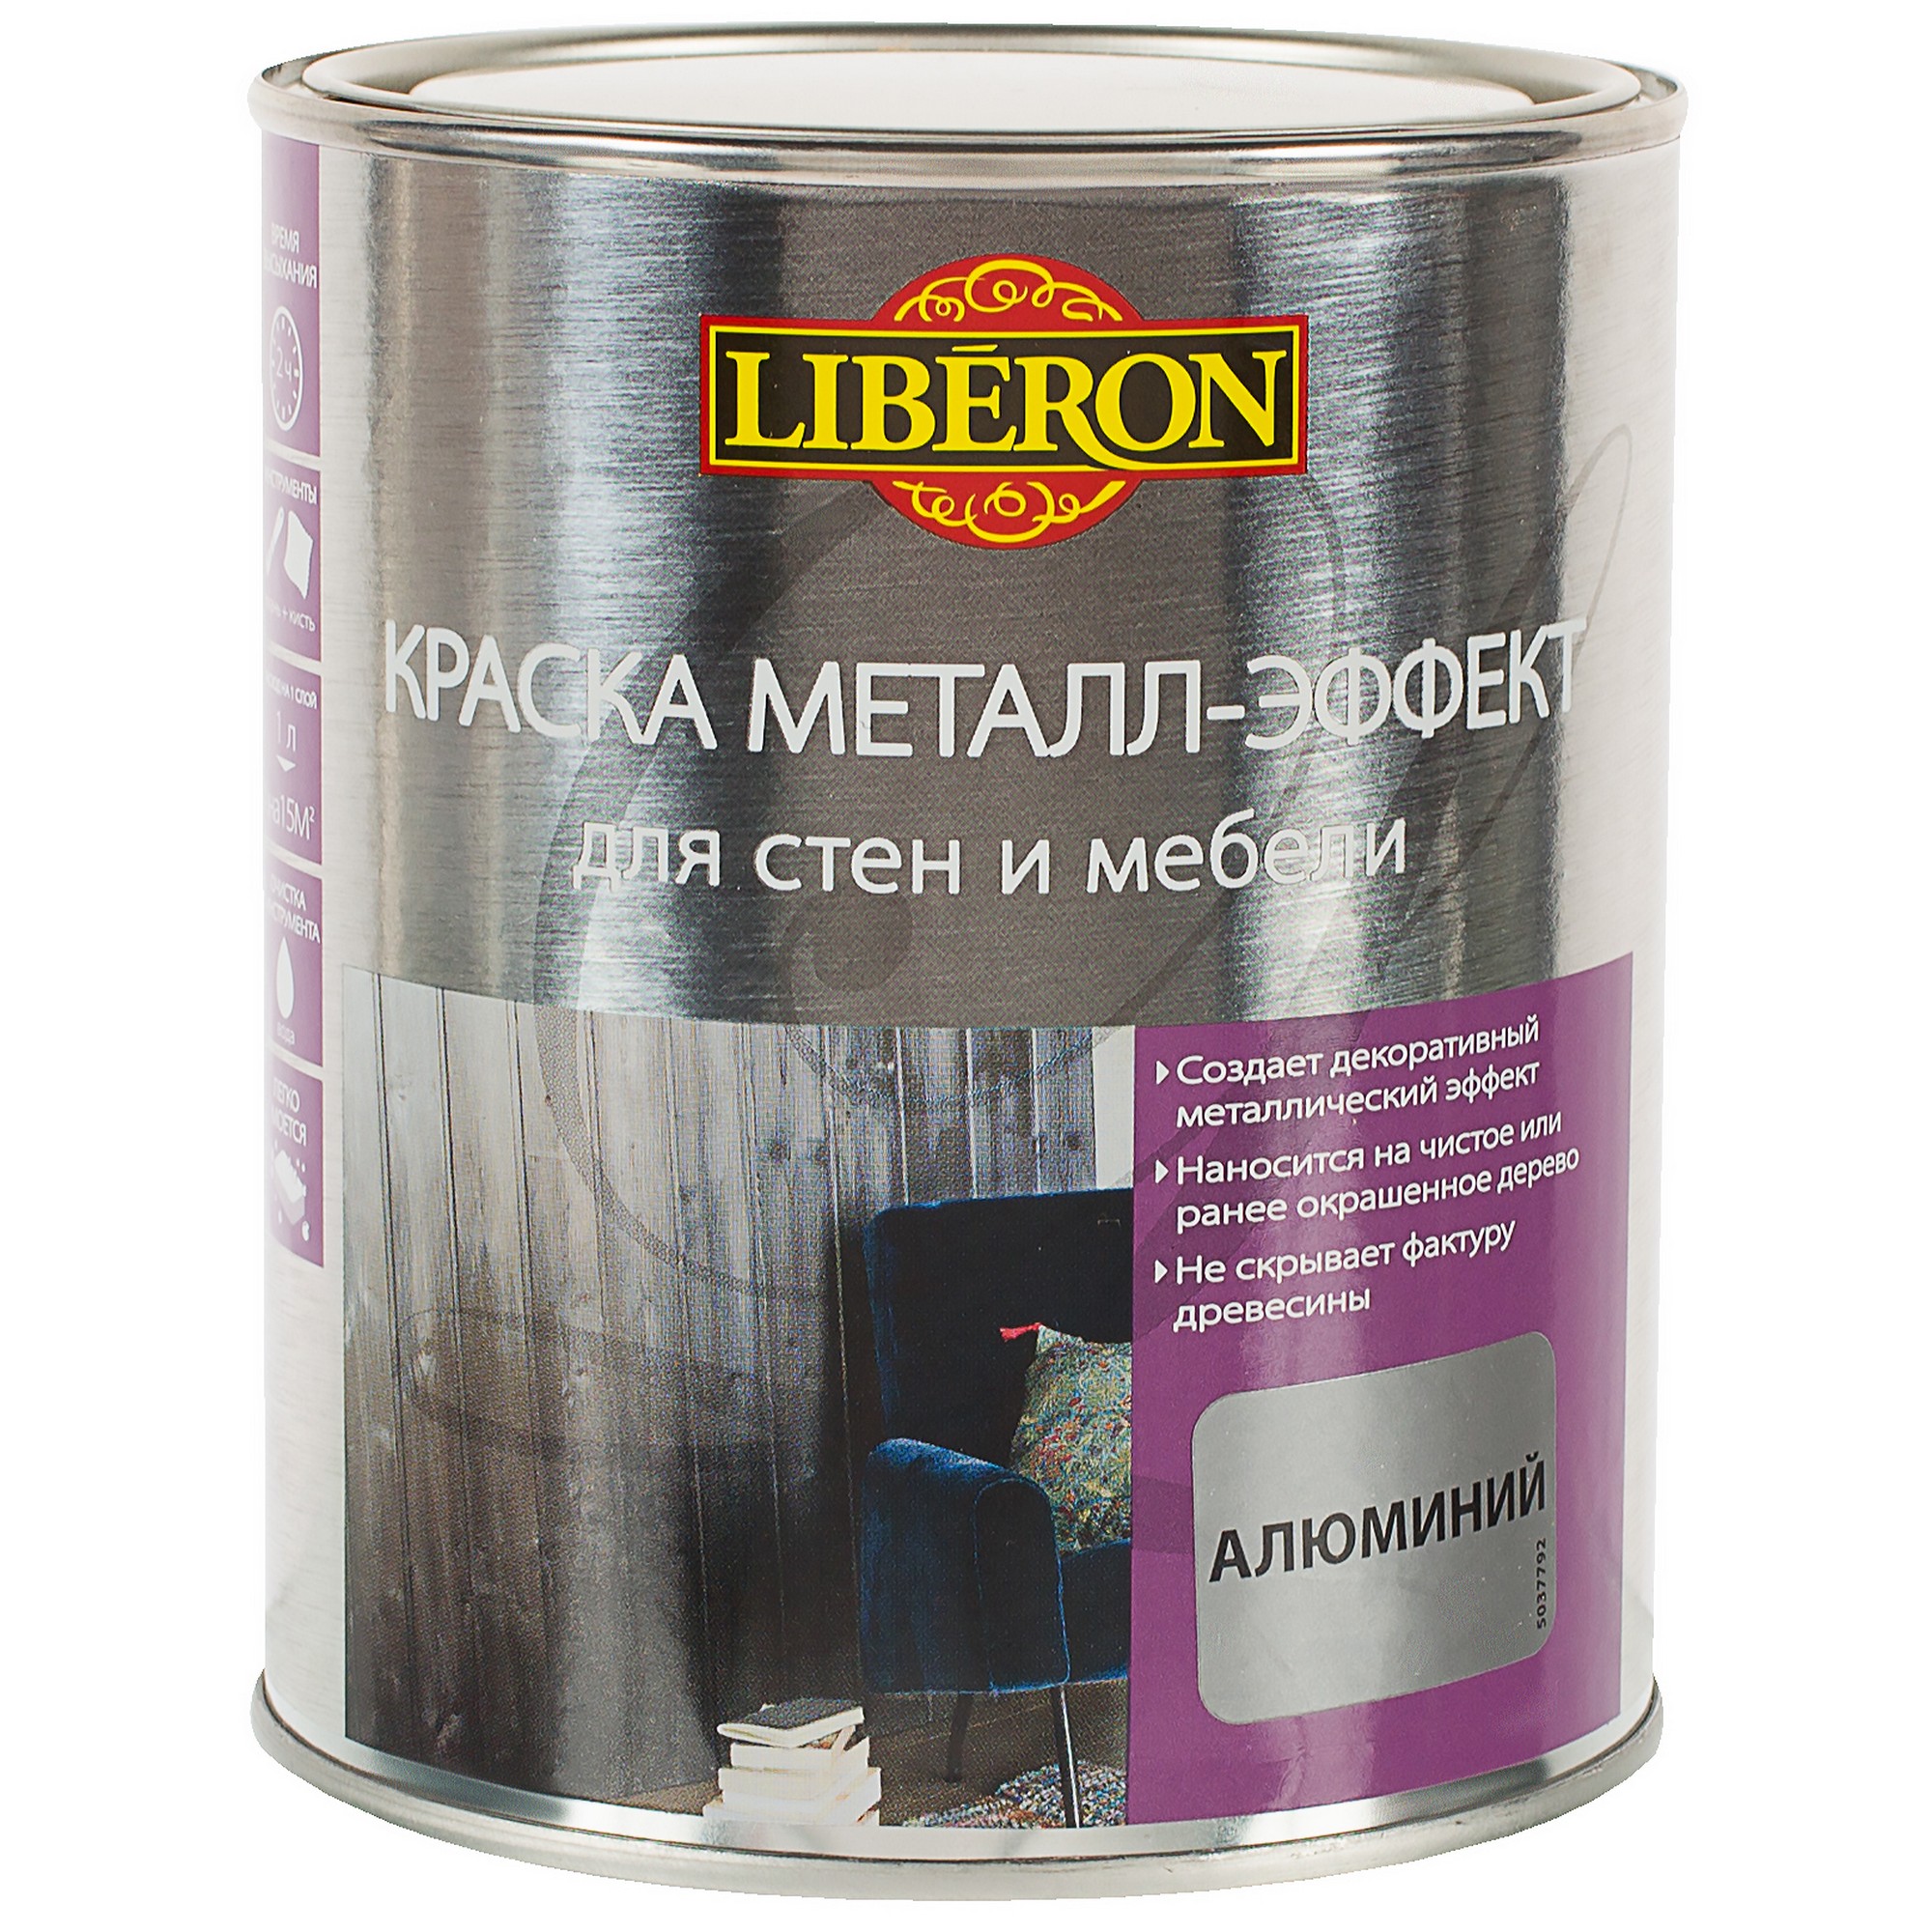 Тип краски для металлических поверхностей. Liberon краска металл-эффект. Liberon краска металл-эффект алюминий. Liberon краска металл-эффект графит. Краска для дерева краска v33.